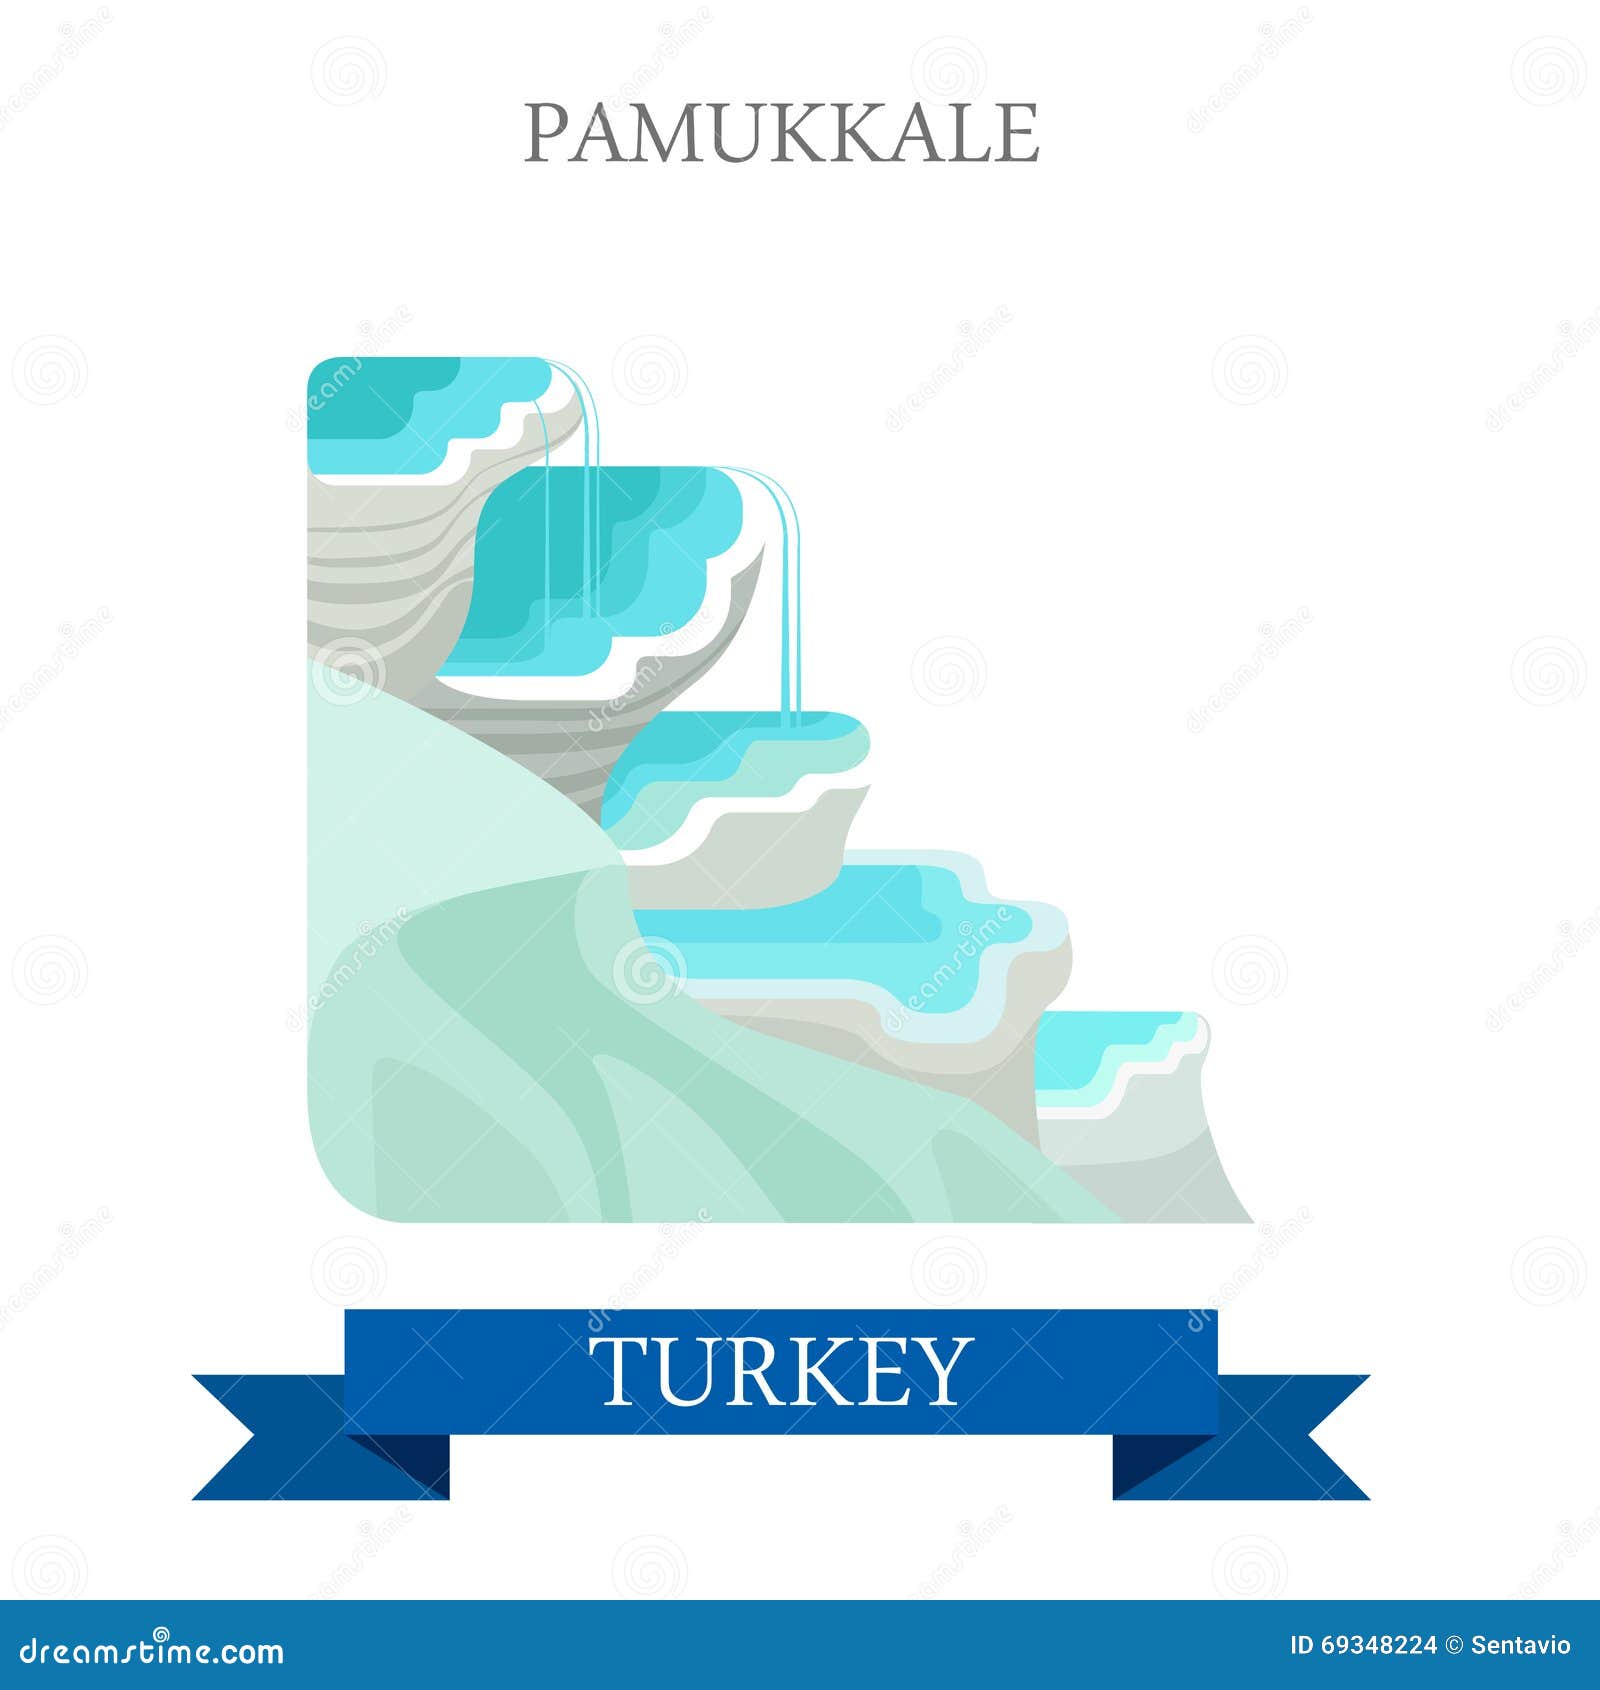 pamukkale in turkey attraction tourist attraction landmark